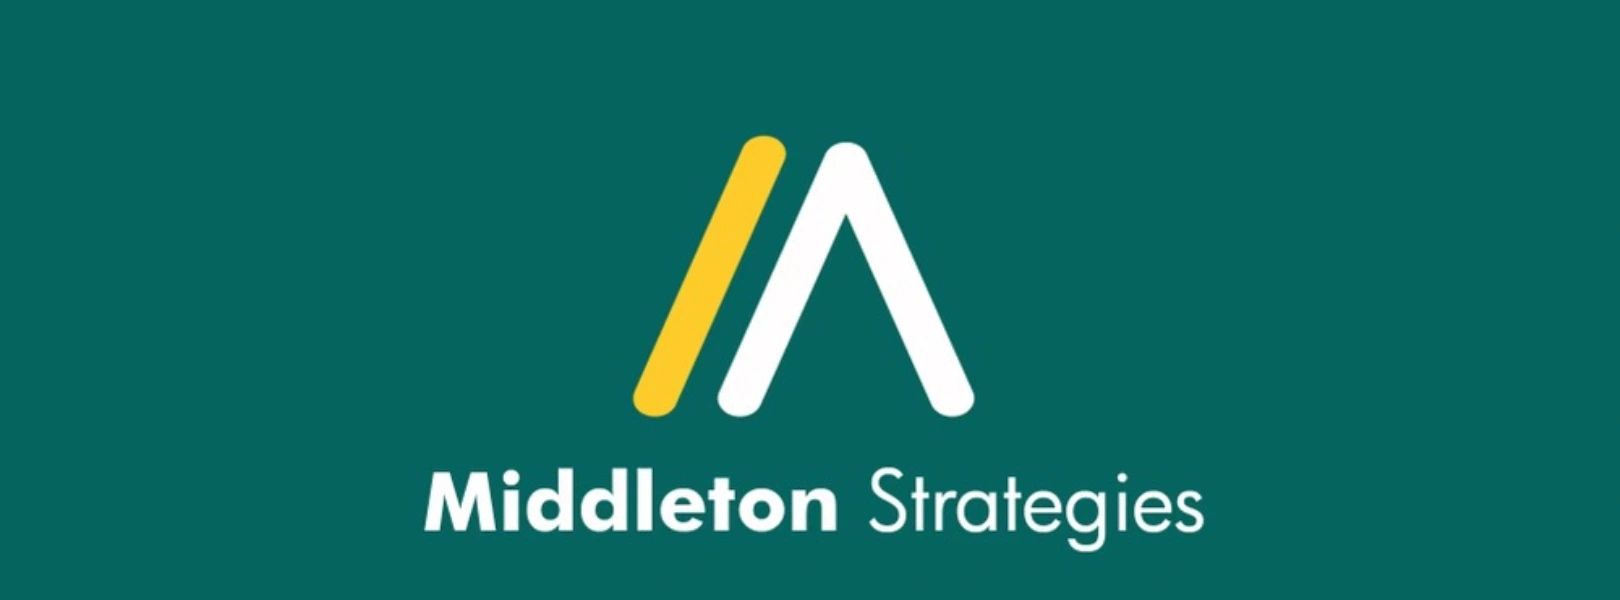 (c) Middletonstrategies.com